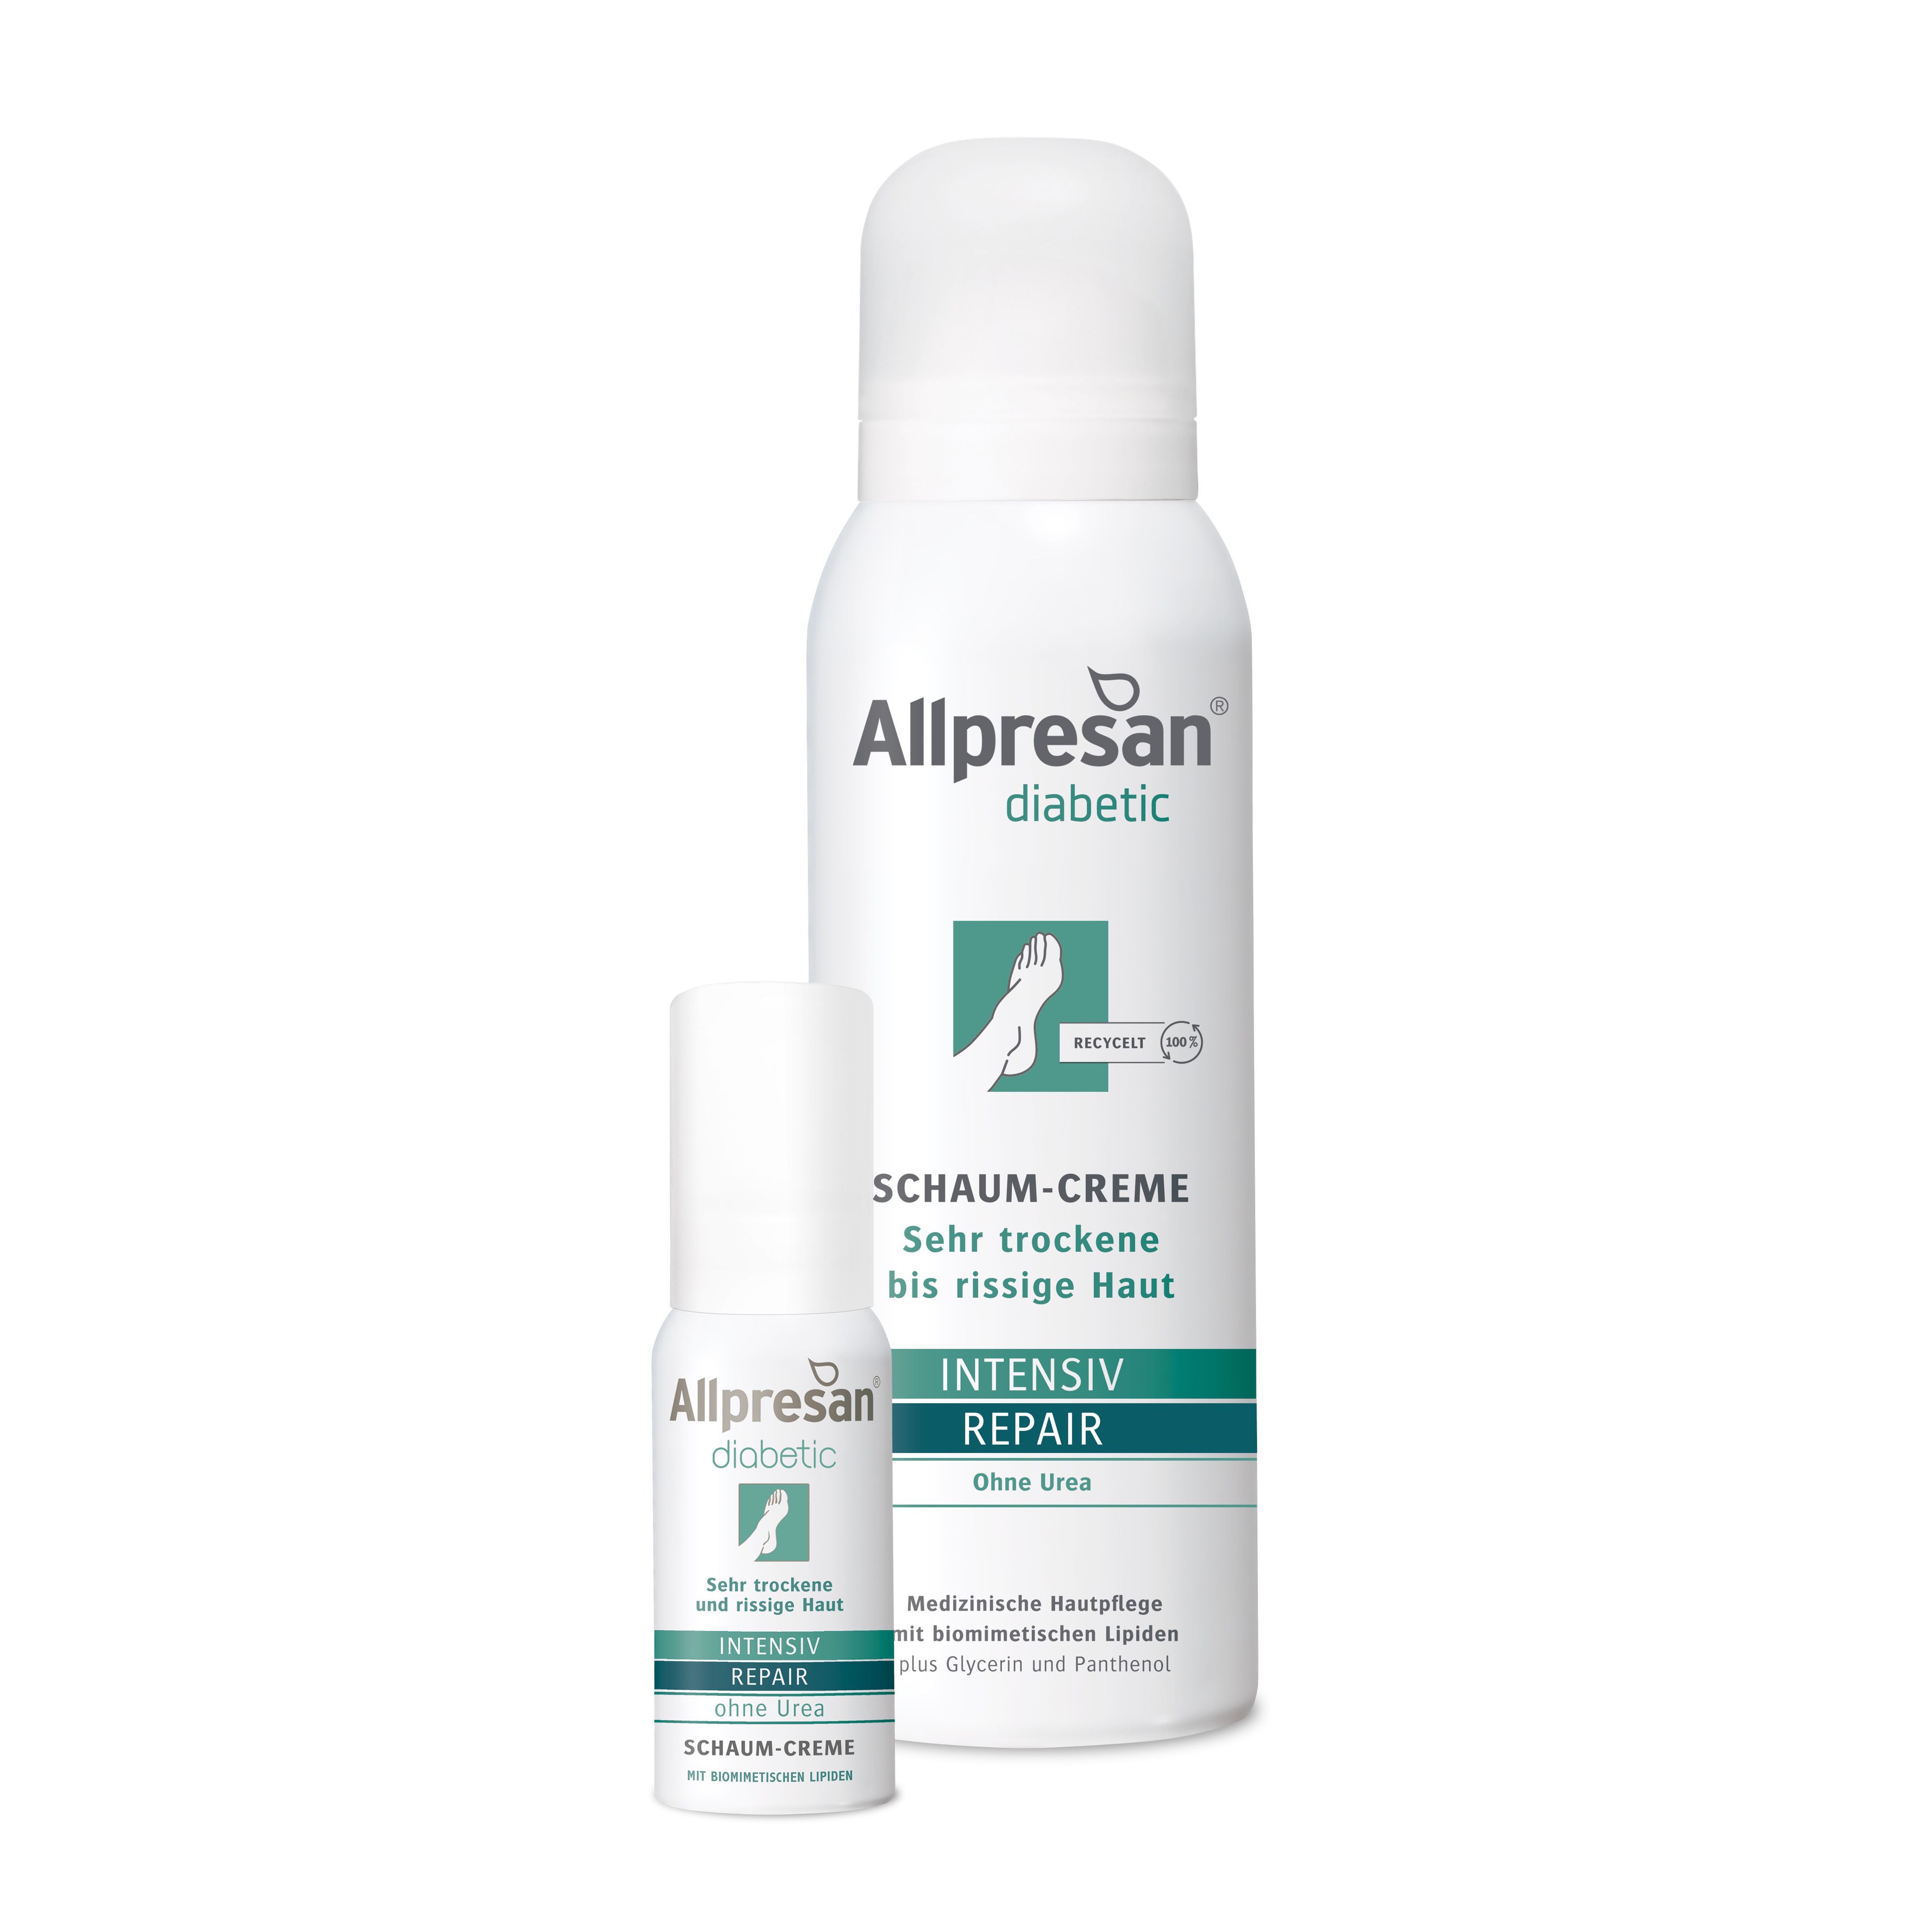 Allpresan® diabetic Intensiv Repair Schaum-Creme ohne Urea